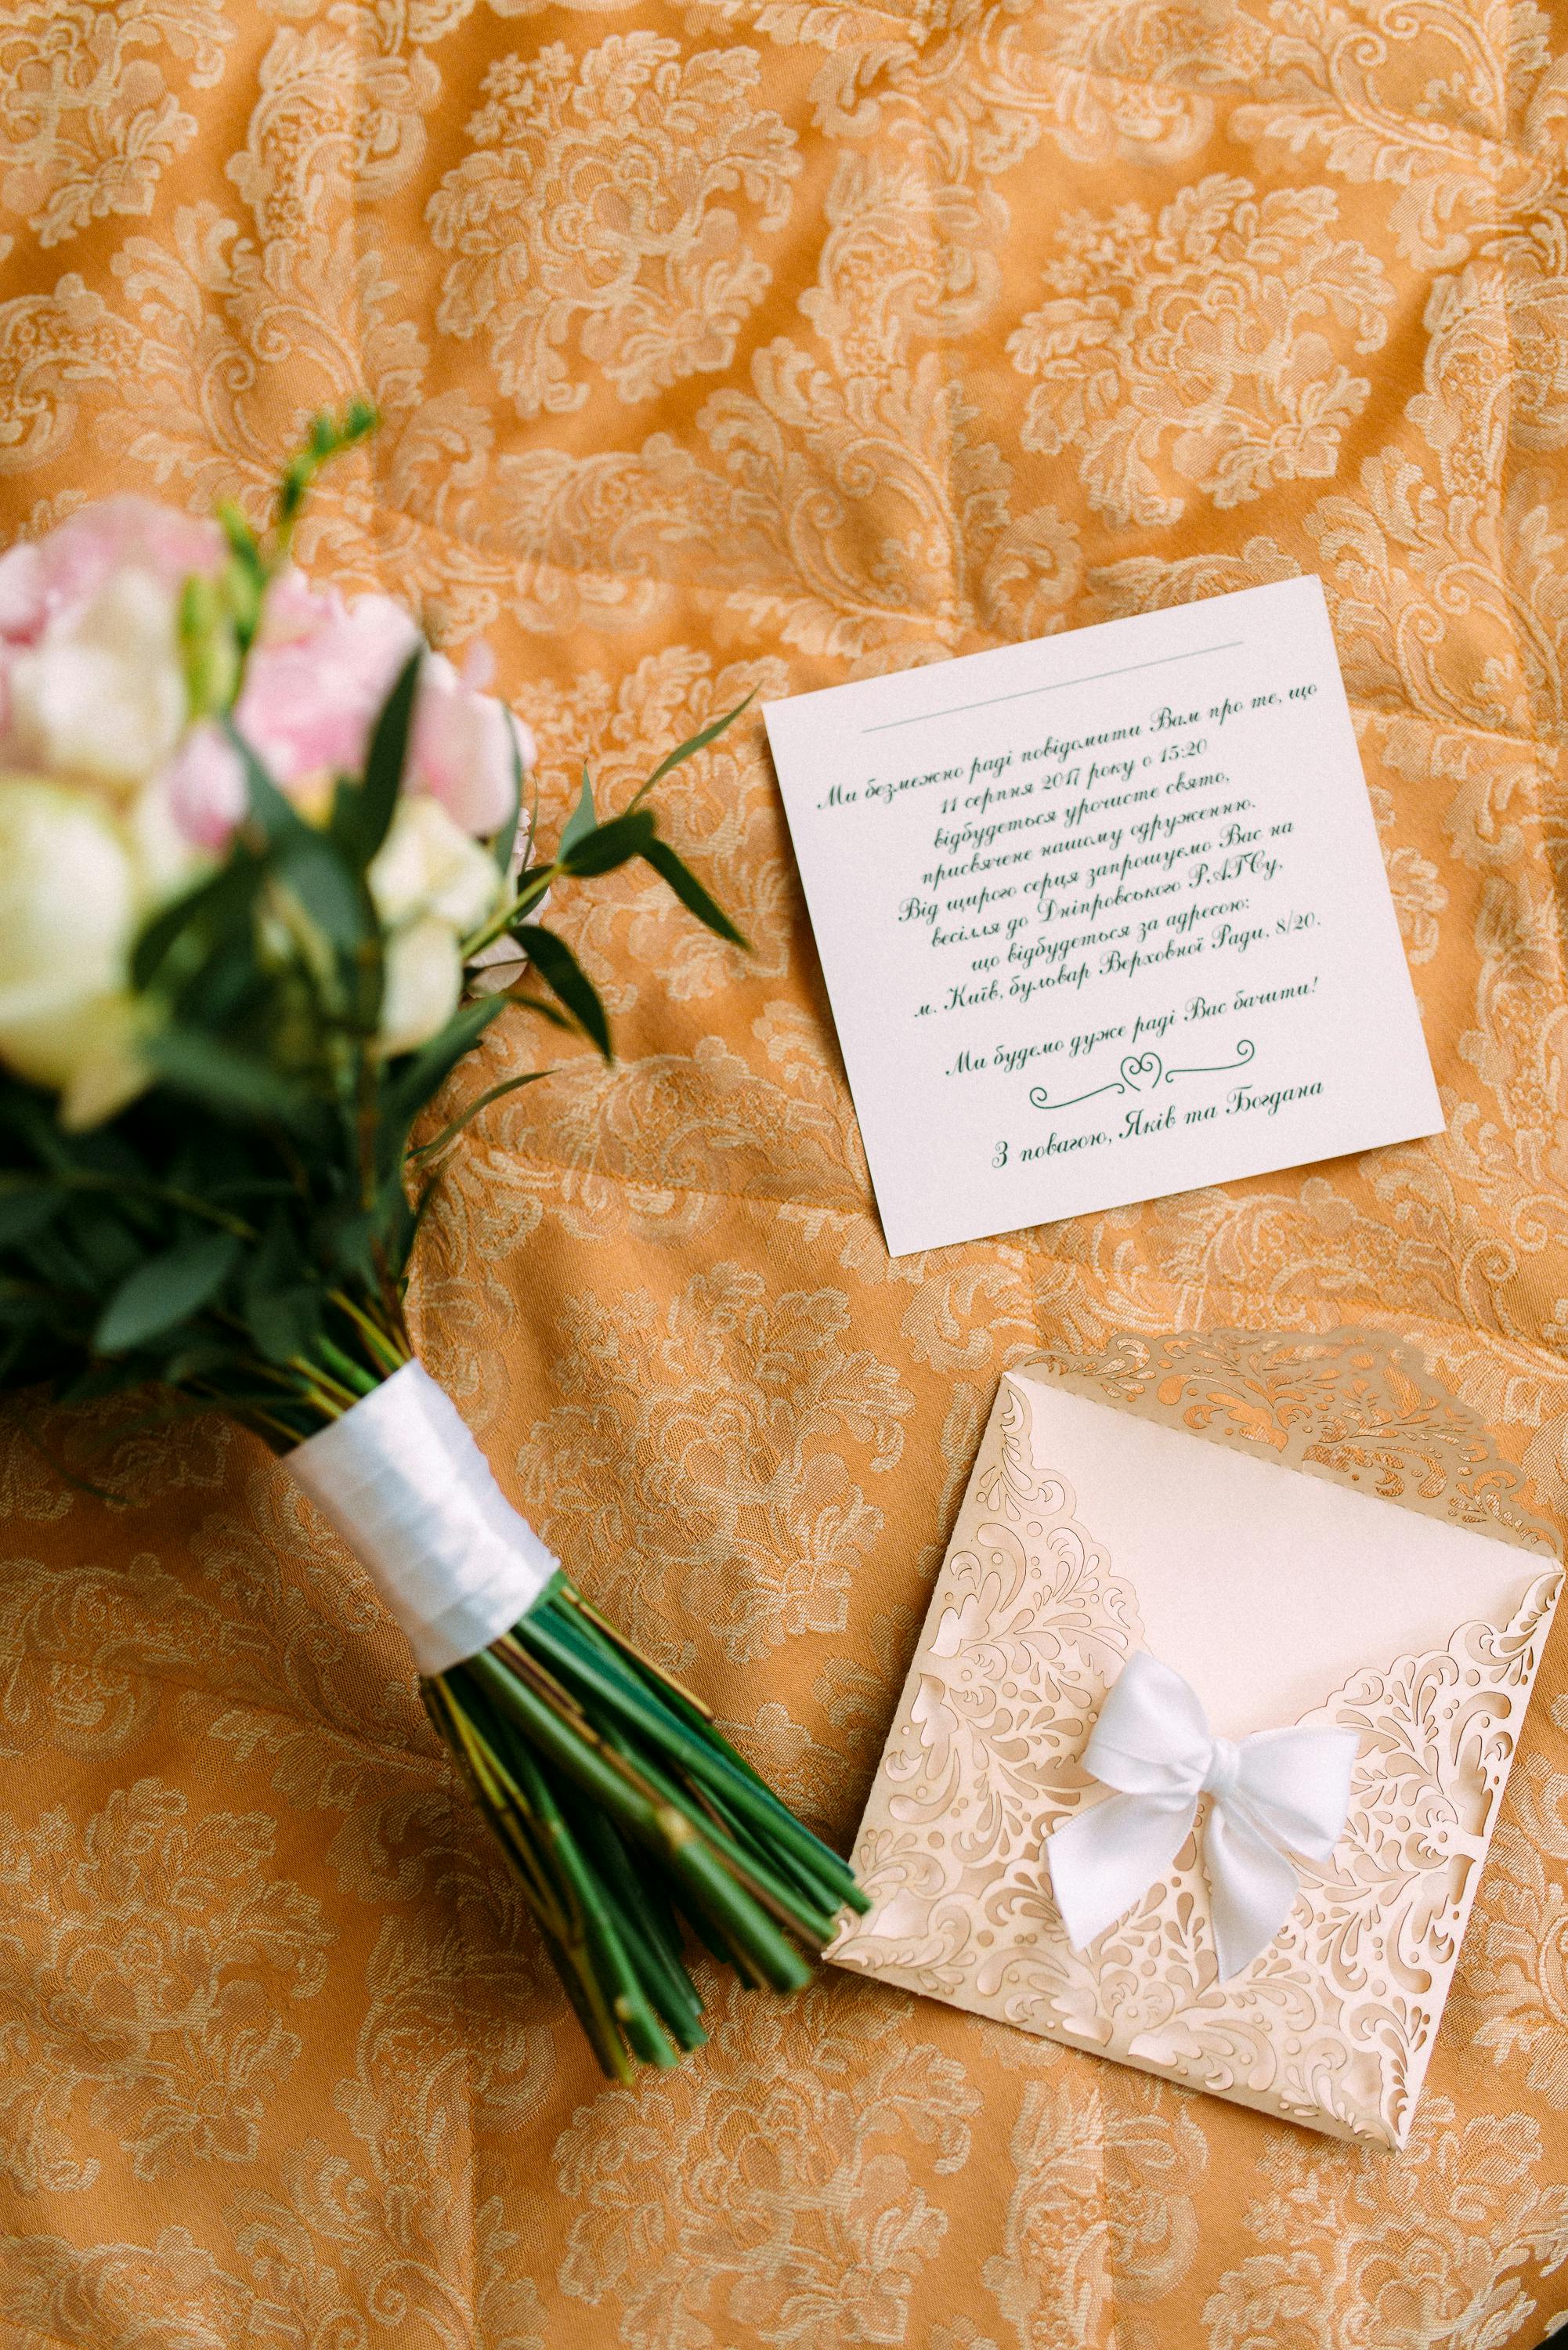 Wedding invitation | Source: Pexels